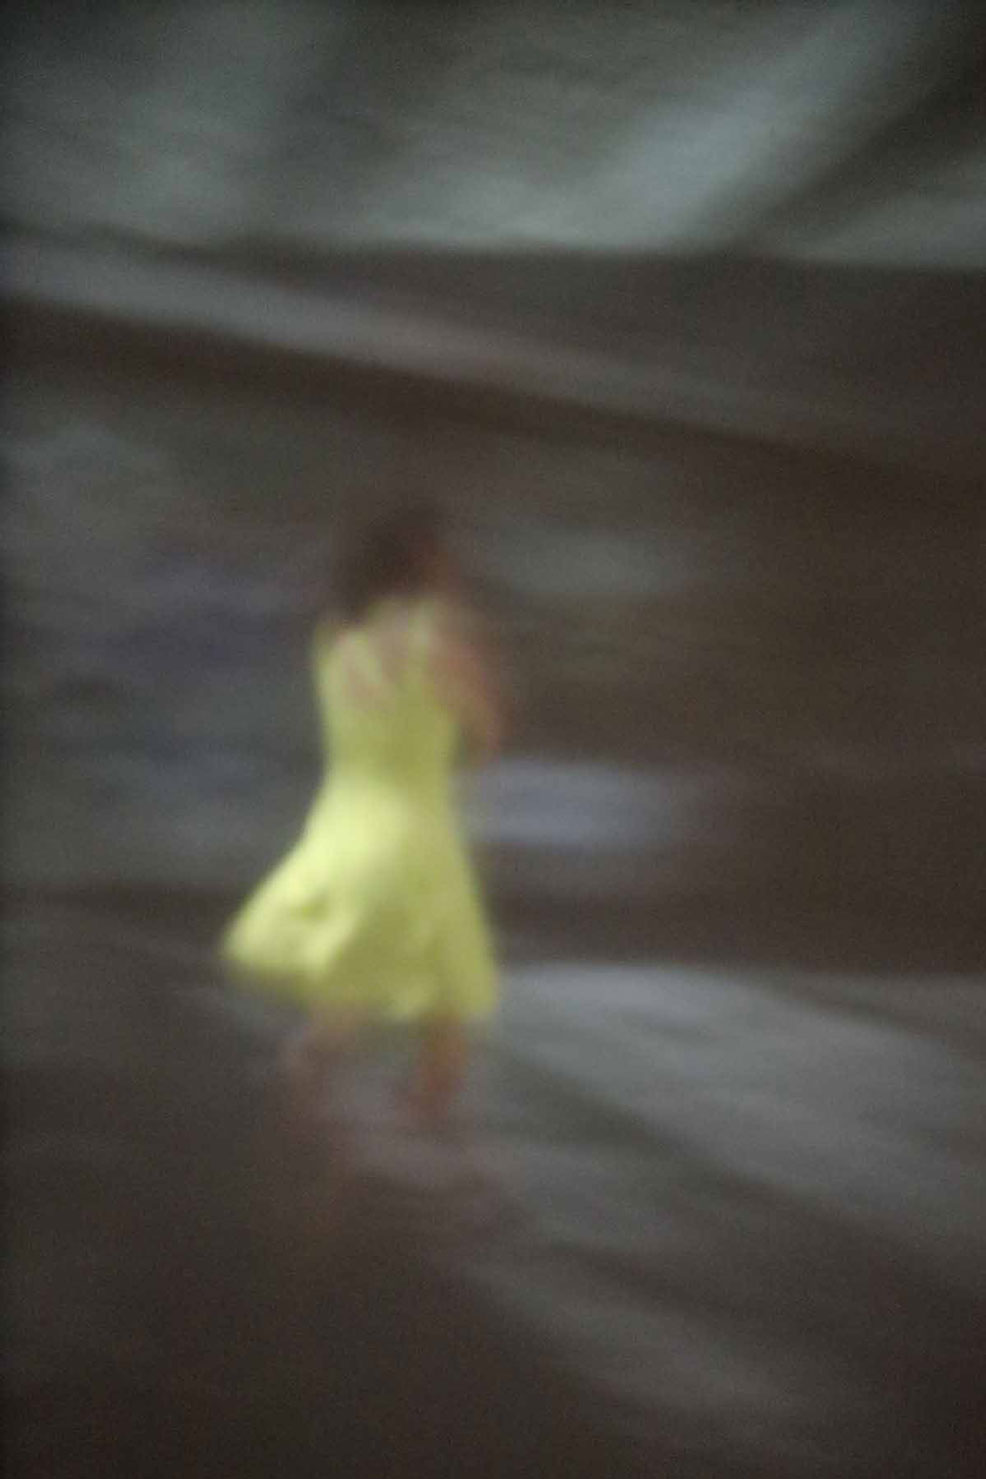 39 „Kühles gelb im Grauen Umraum“, 2020, Neuseeland, Camera Obscura, Pigmentdruck auf Alu-Dibond